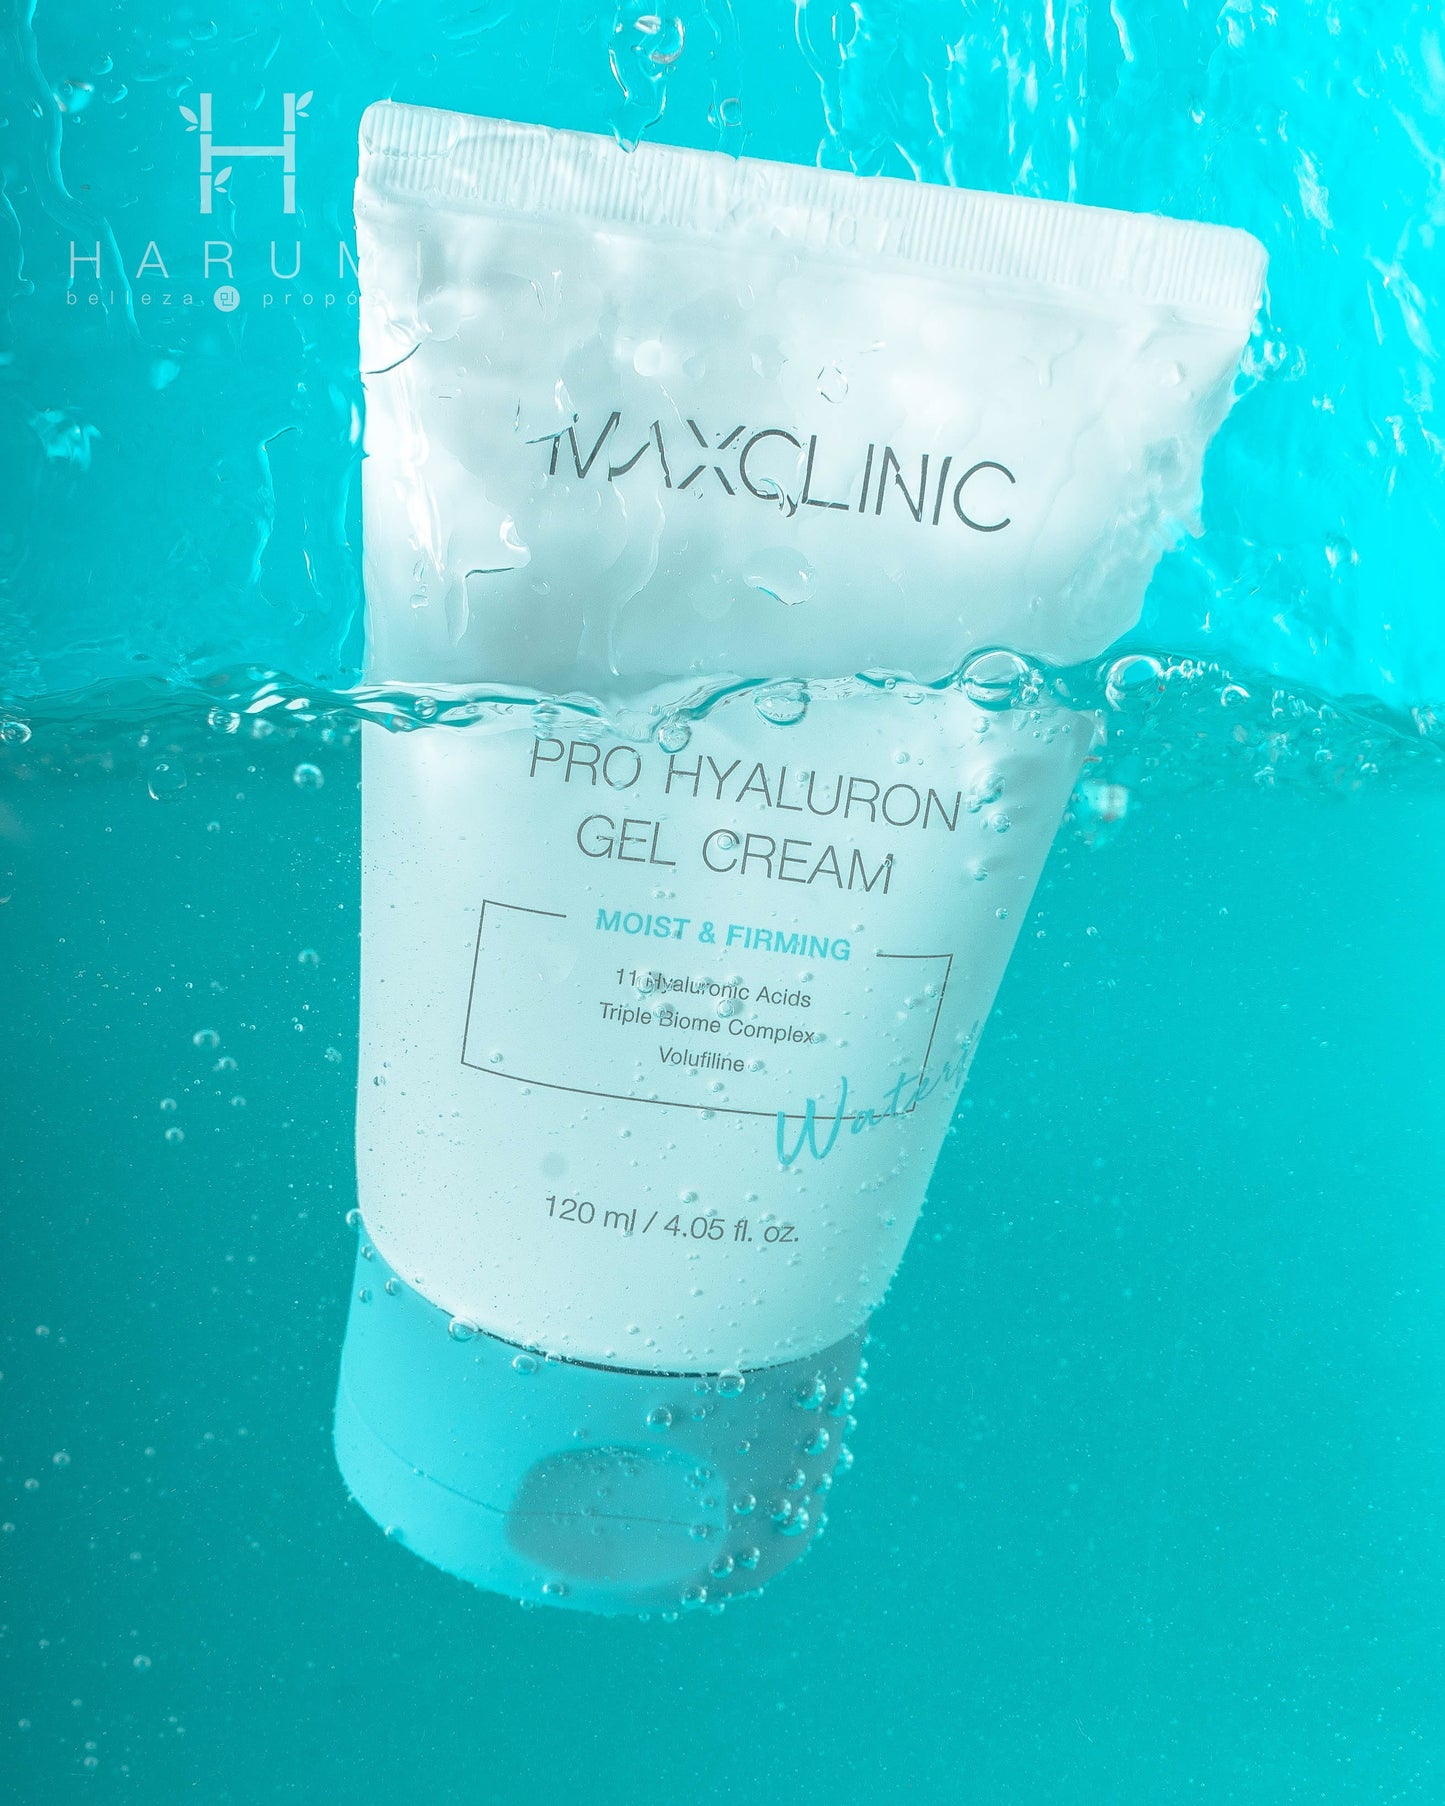 Maxclinic Prohyaluron Gel Cream Skincare maquillaje productos de belleza coreanos en Colombia kbeauty